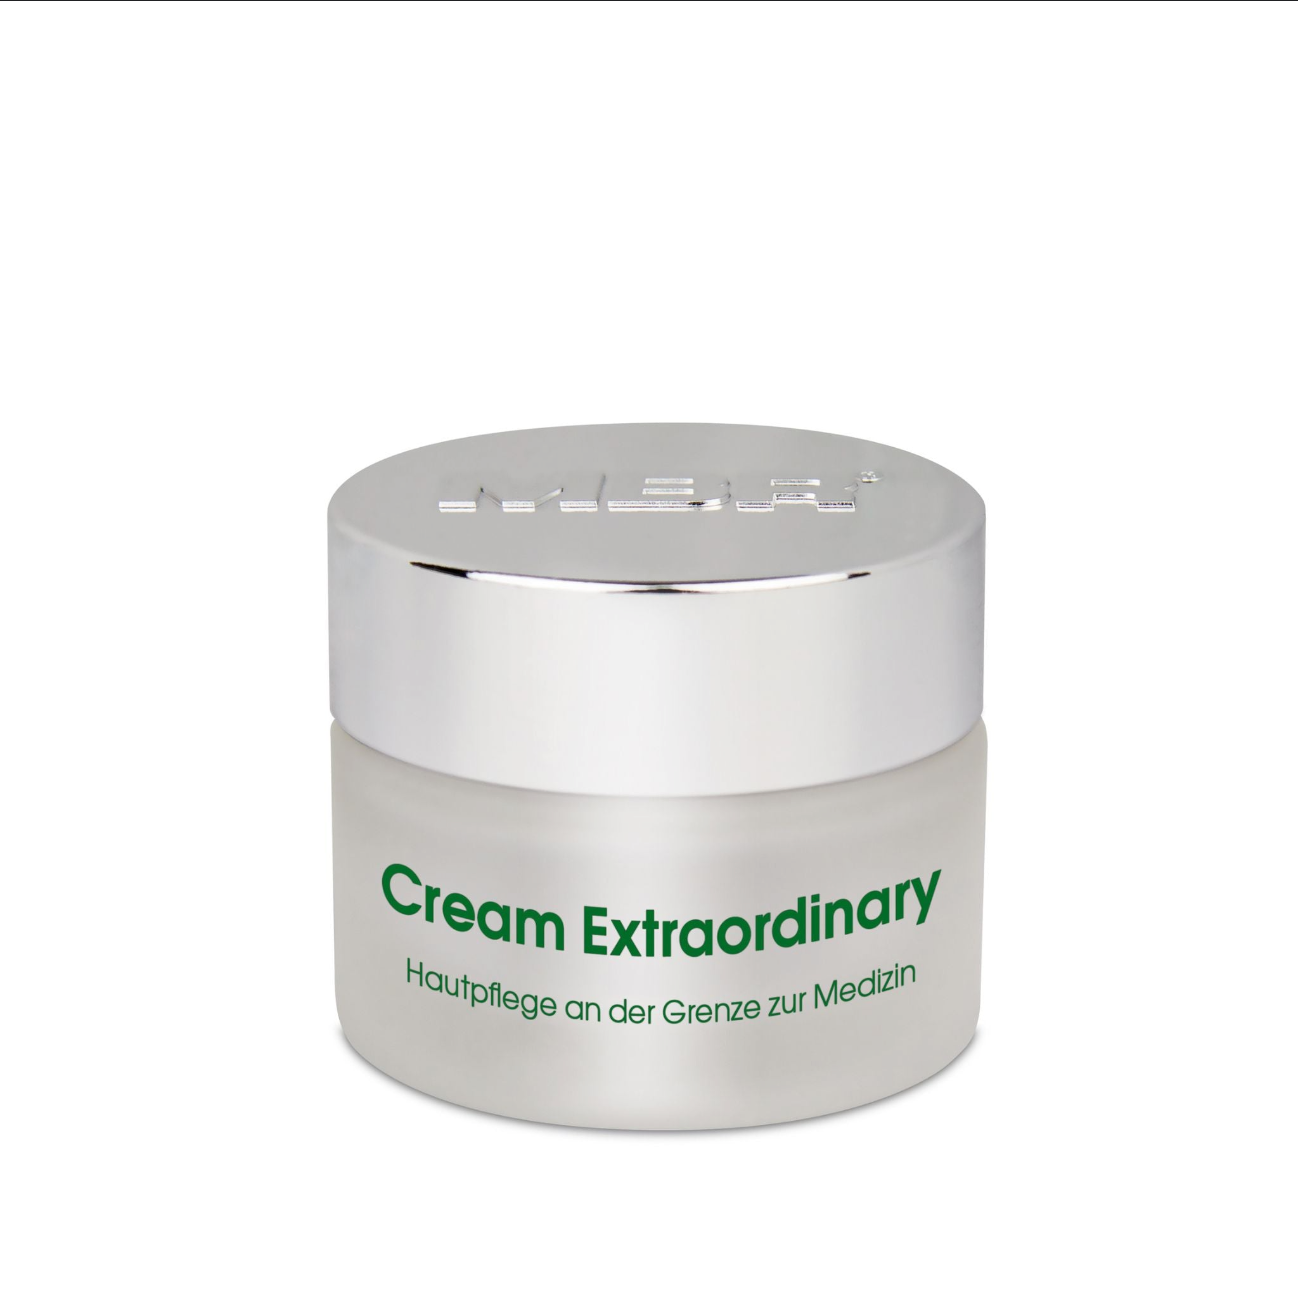 Cream Extraordinary: 24K Gold-Infused Nourishing and Regenerating Cream